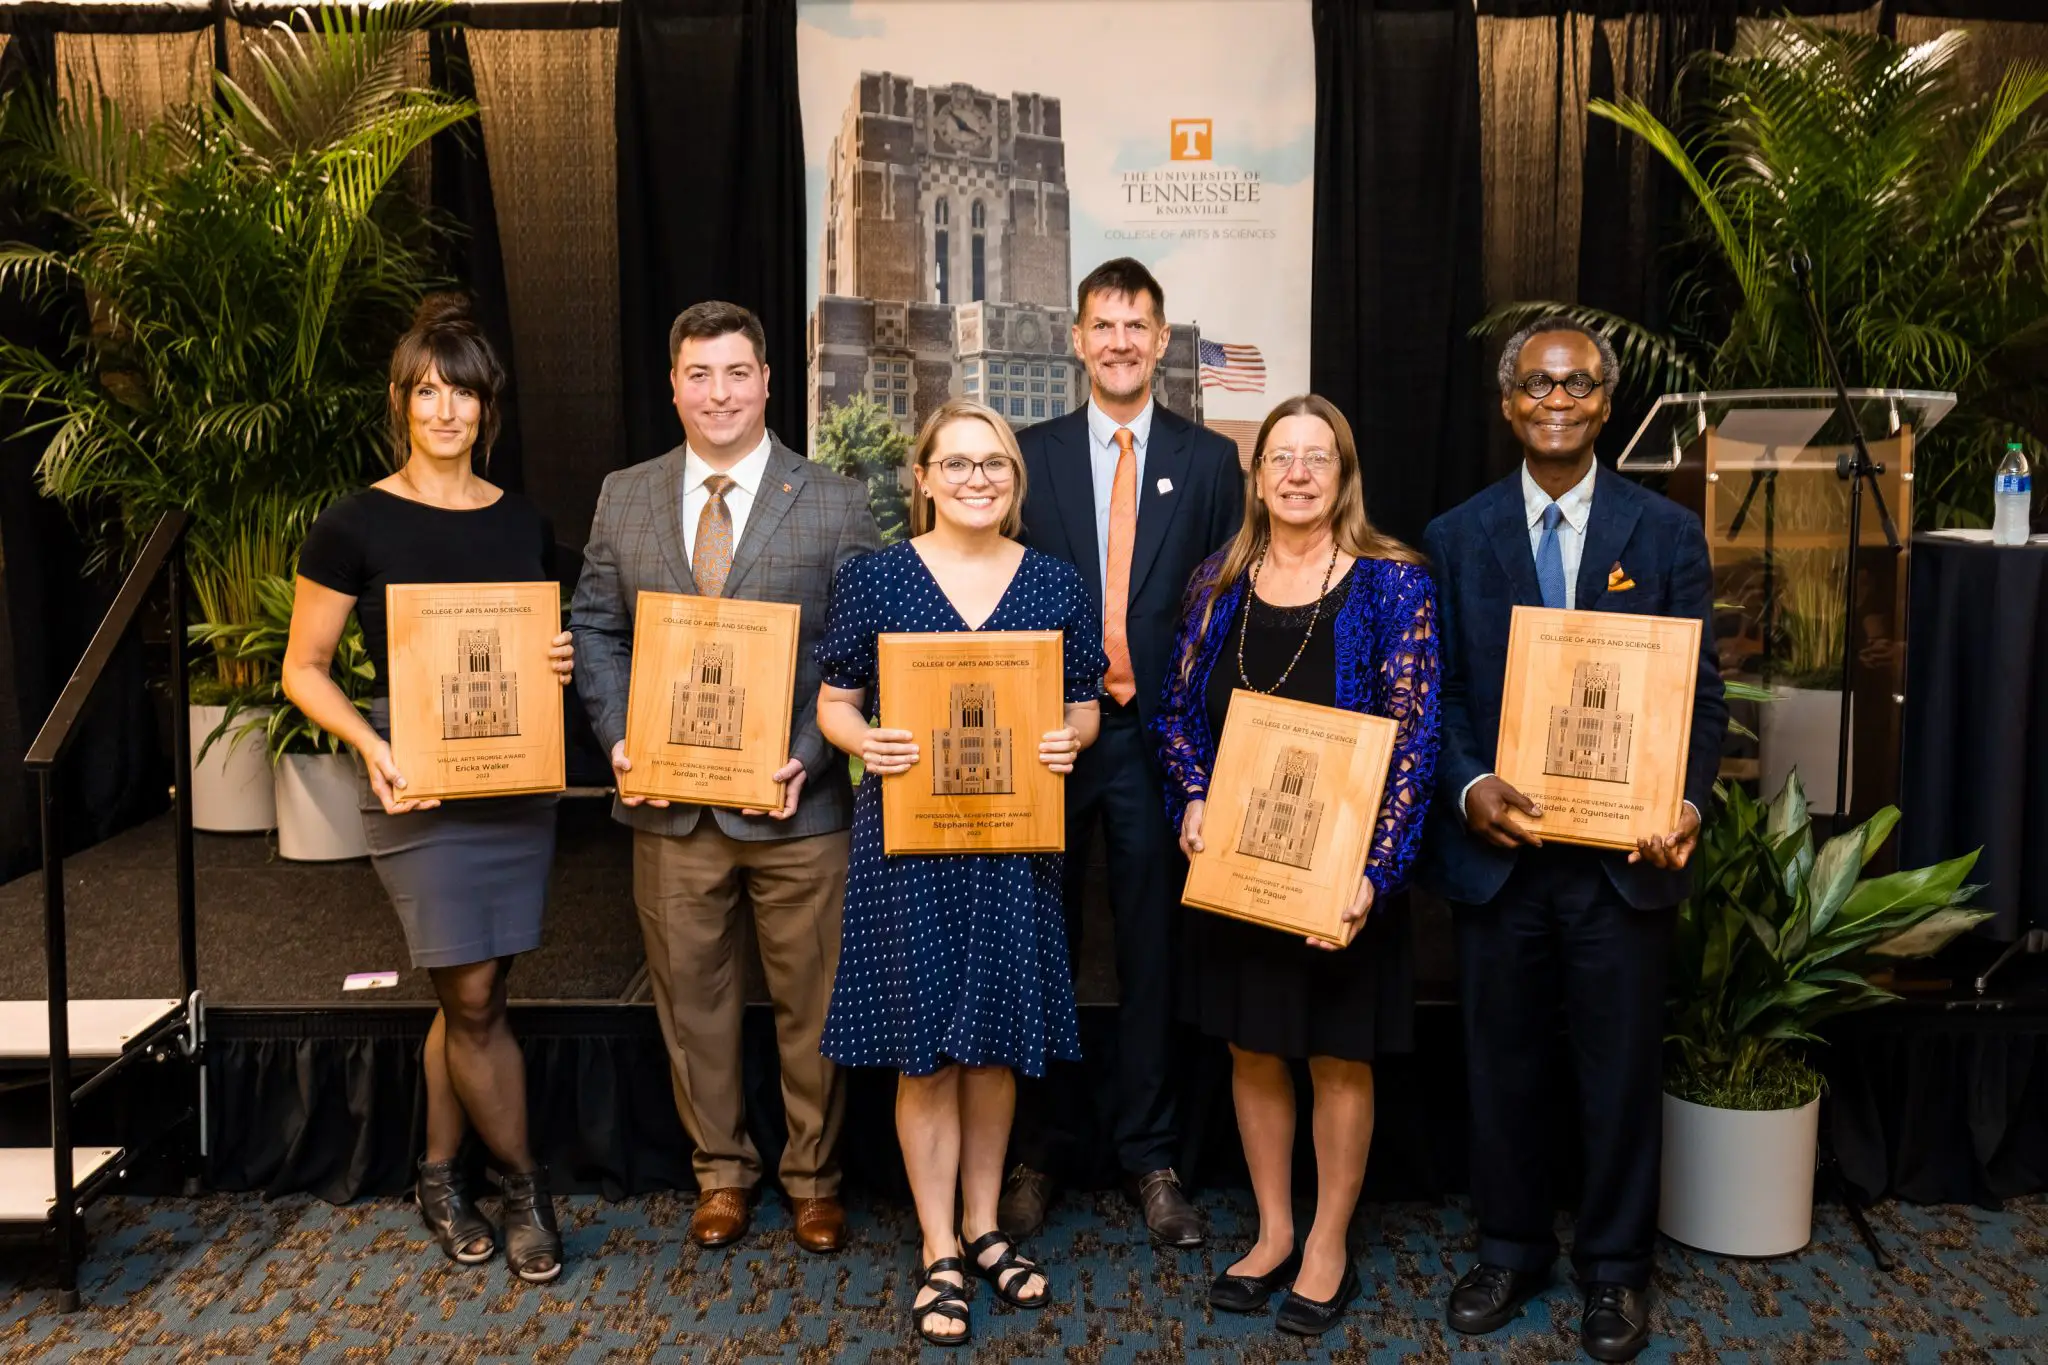 Group photo of award recipients